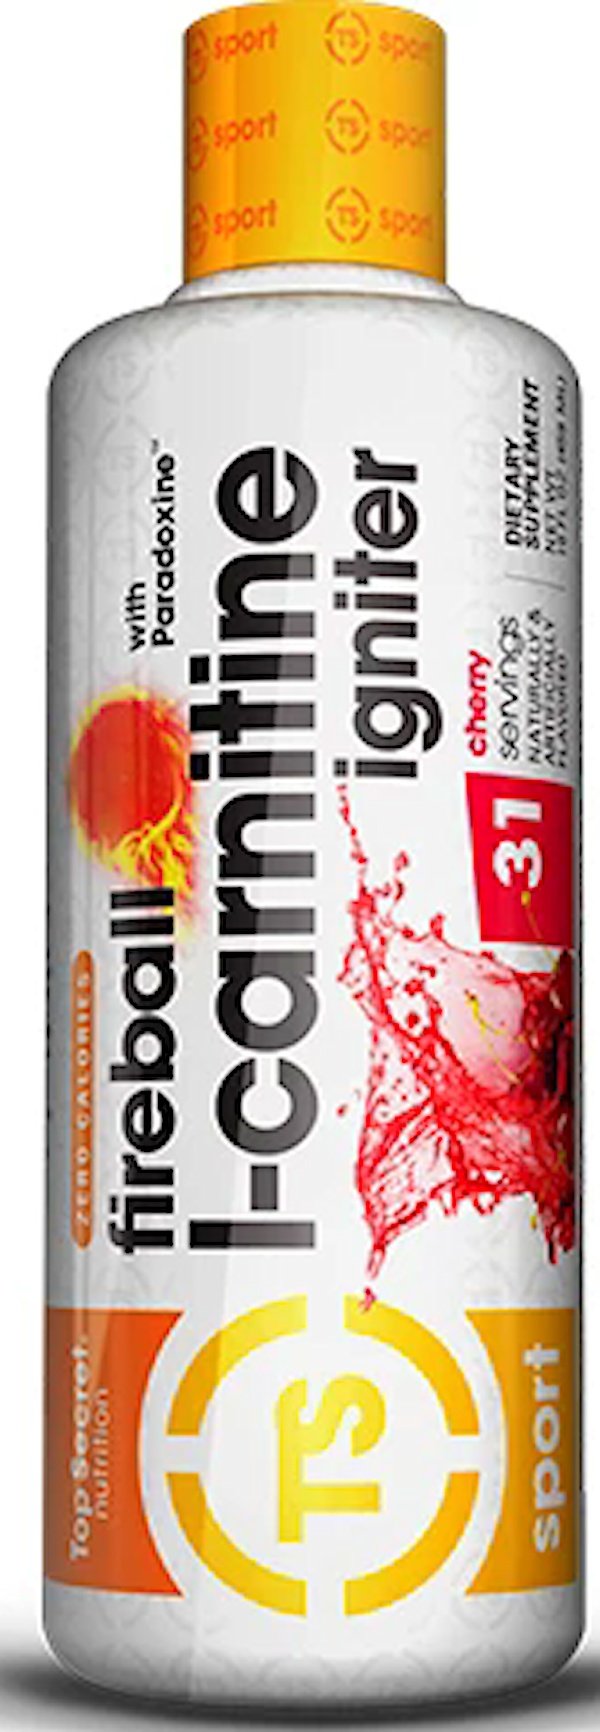 Top Secret Fireball L-Carnitine|Lowcostvitamin.com